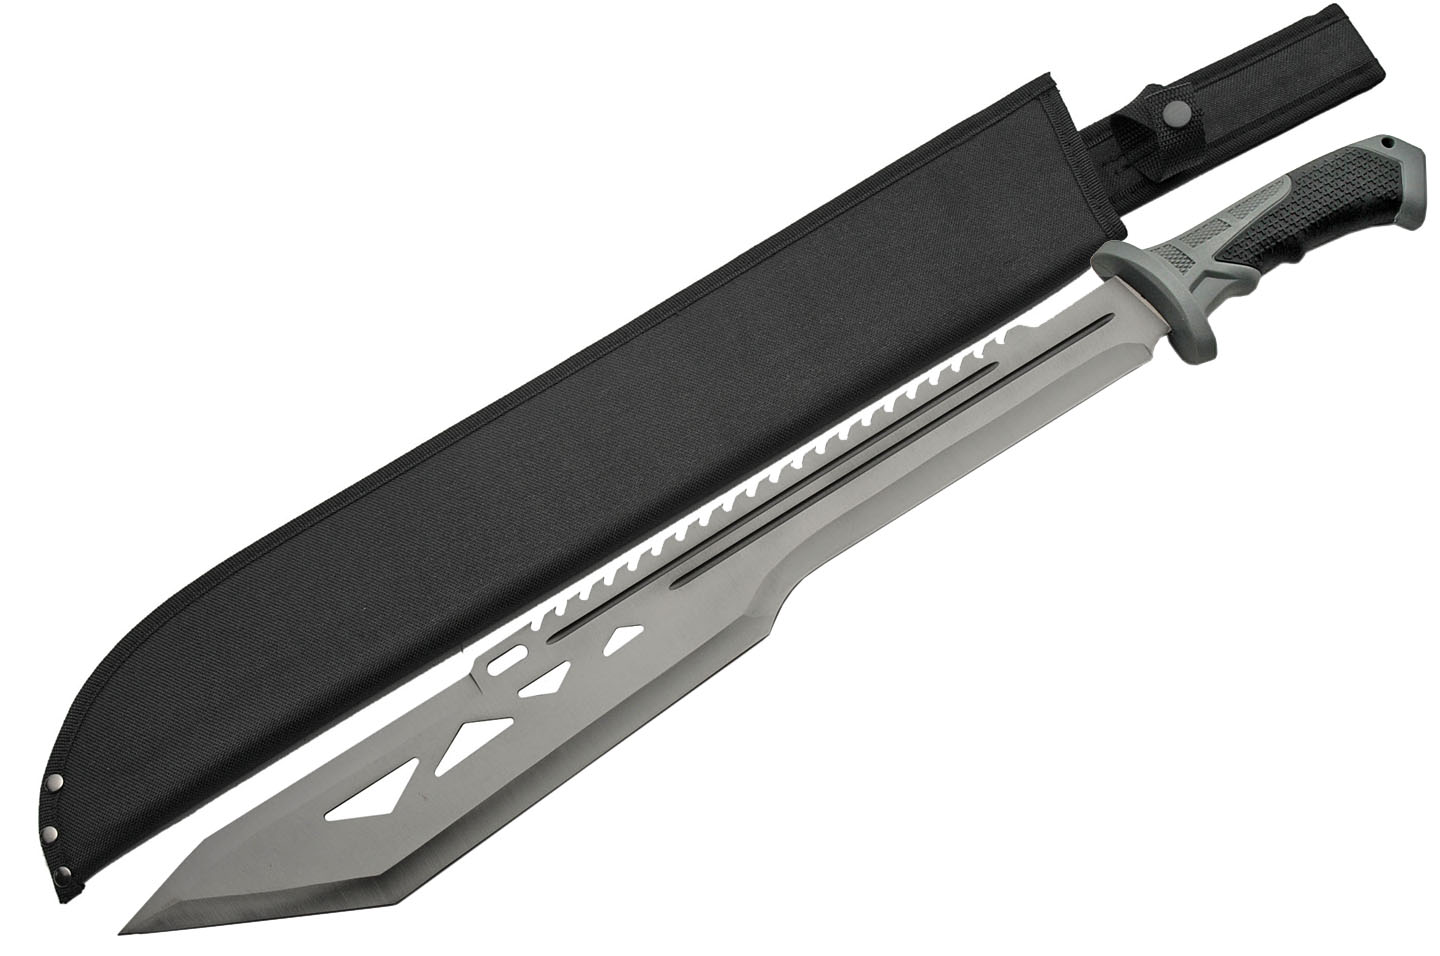 Sheath MacheteRite Edge 25" Overall Silver Blade Rubber Handle Tactical 